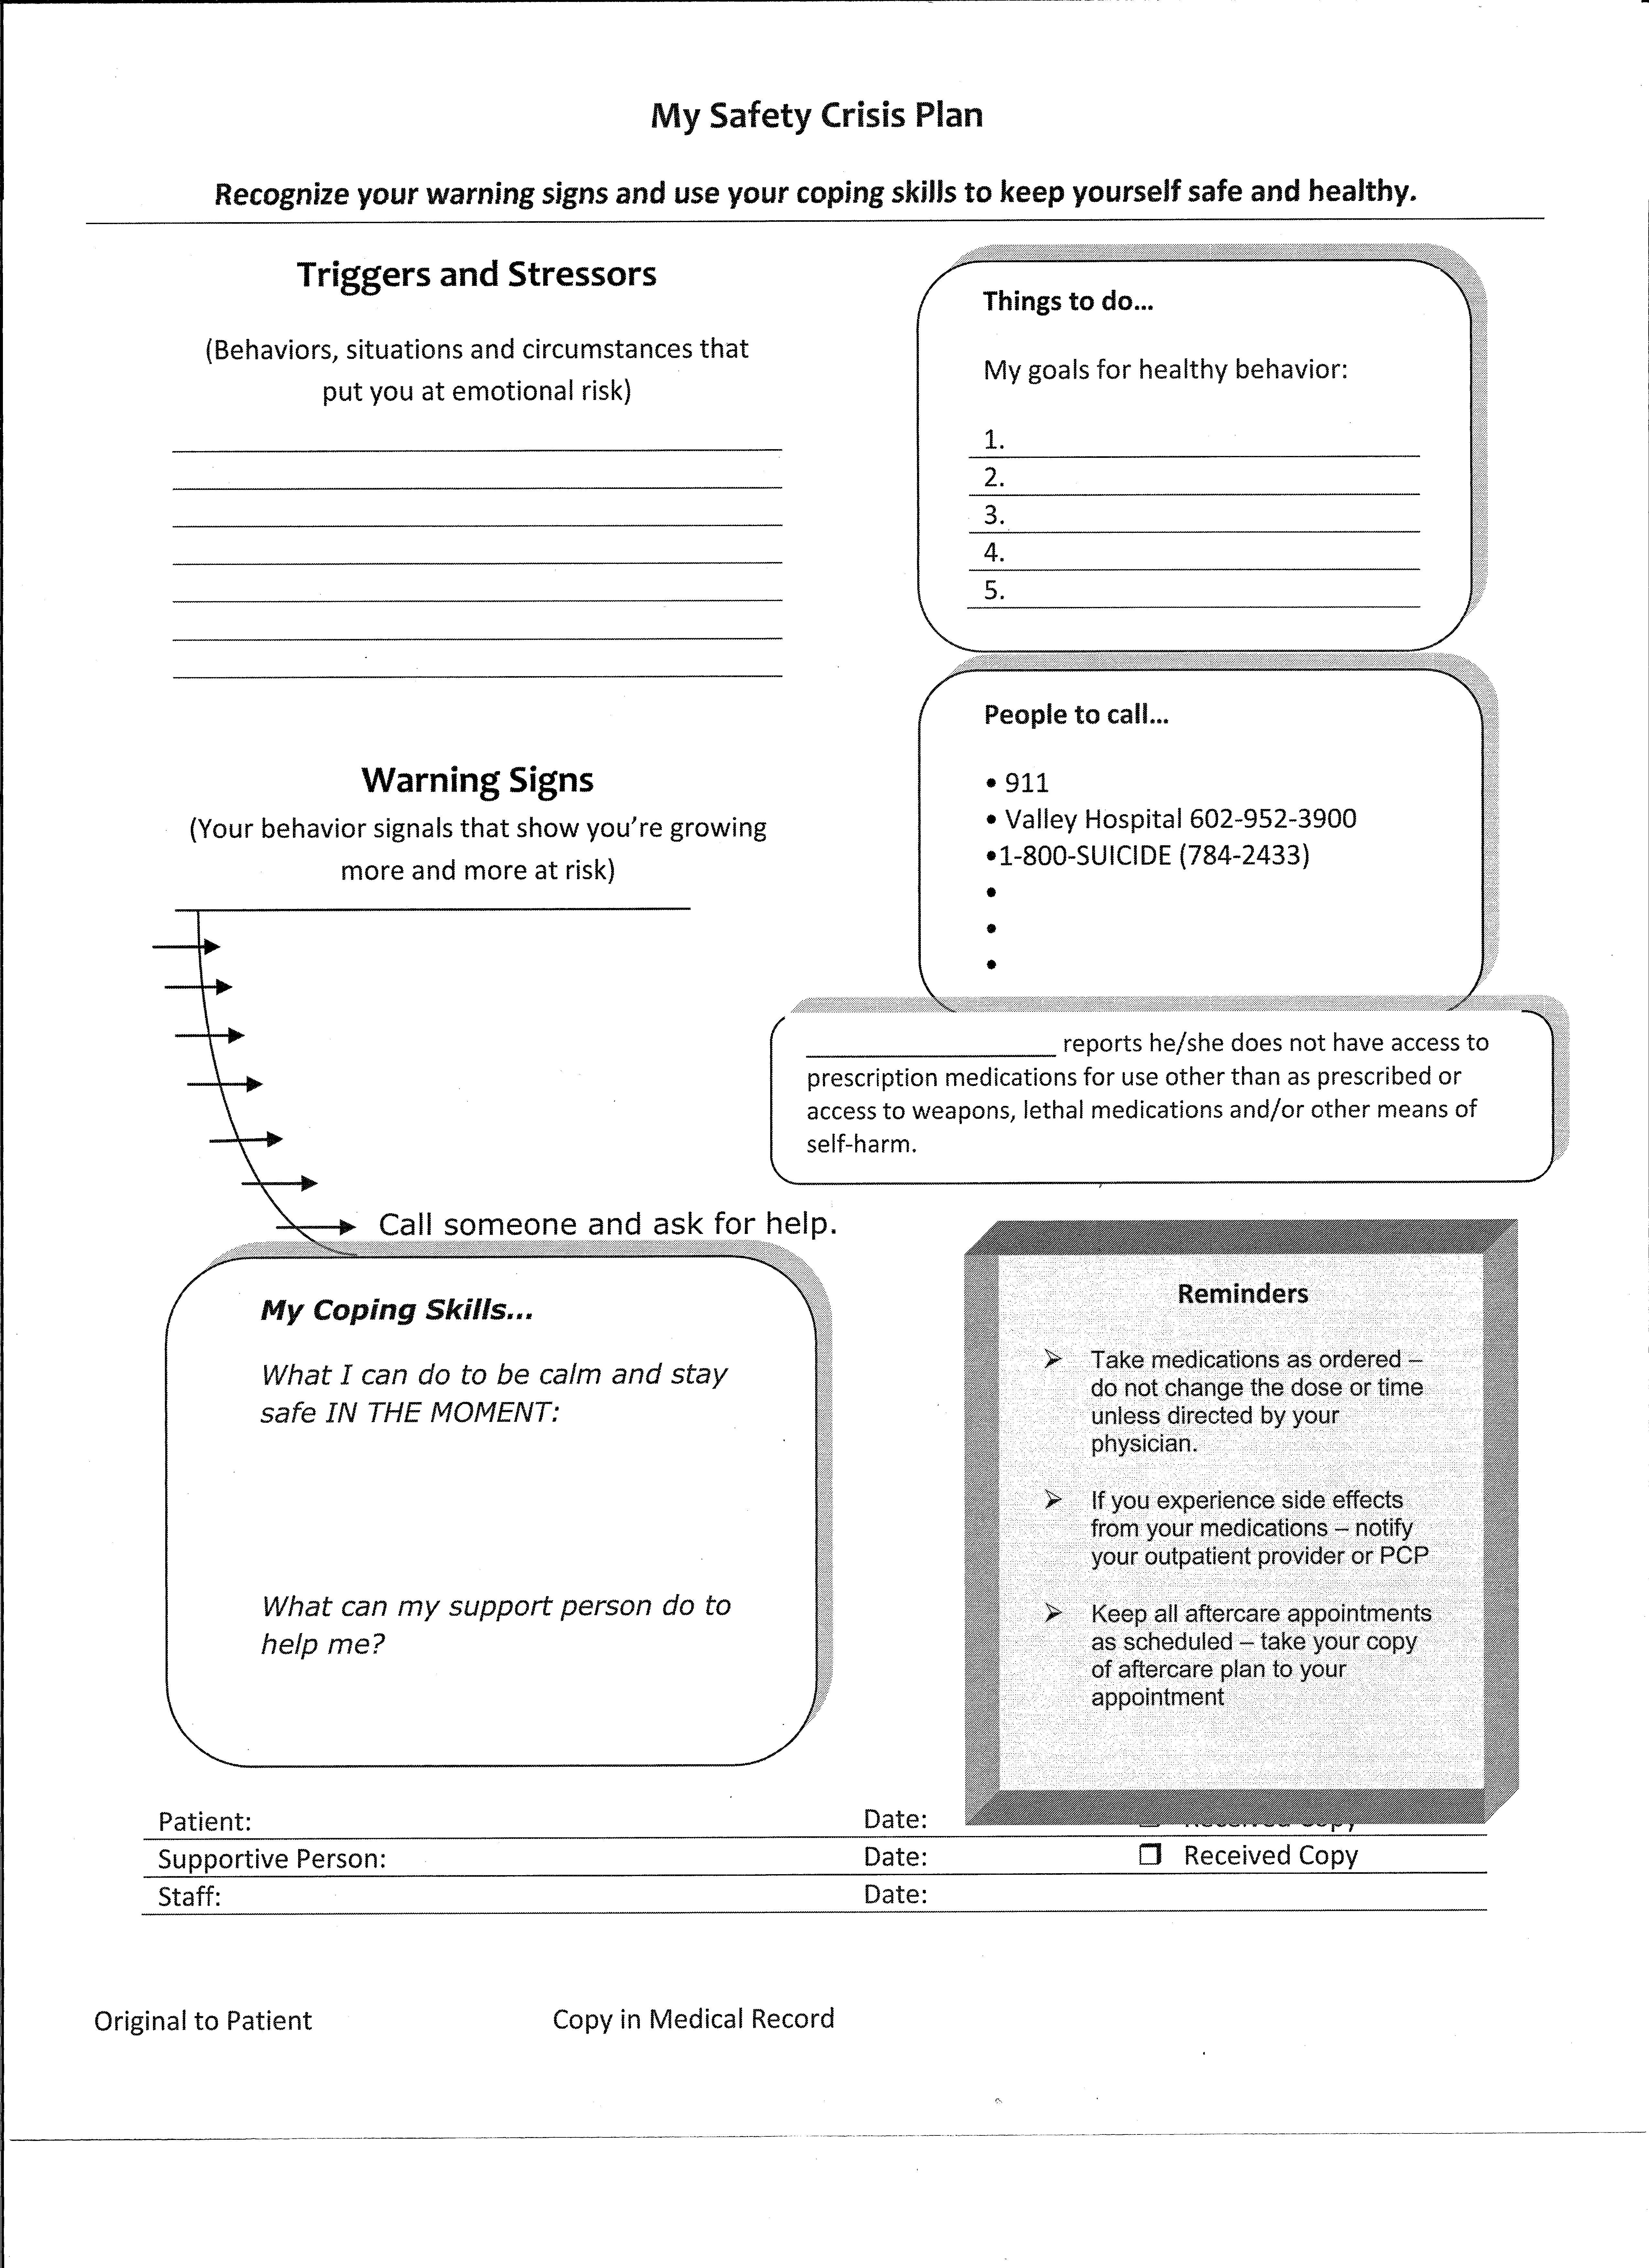 substance abuse worksheets pdf as education com worksheets db excelcom